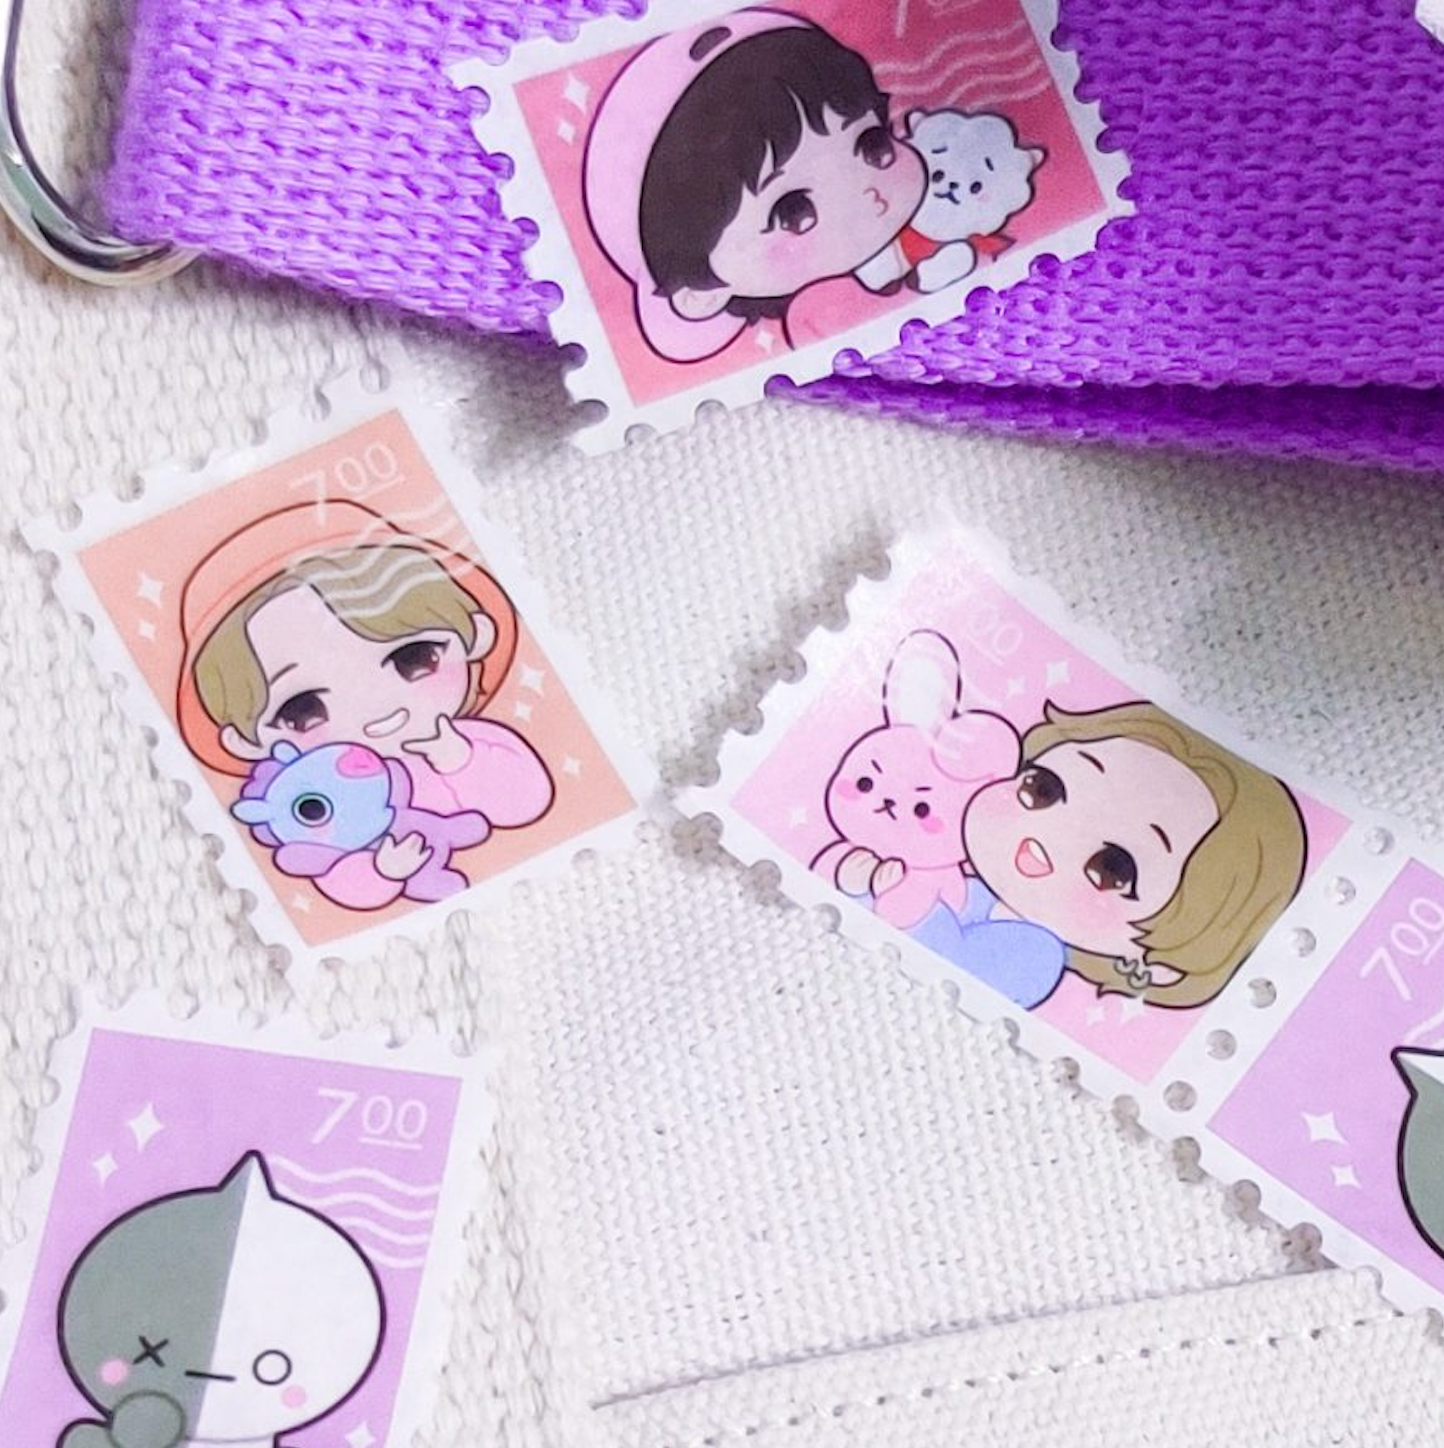 BTS Festa : Stamp Washi Tape